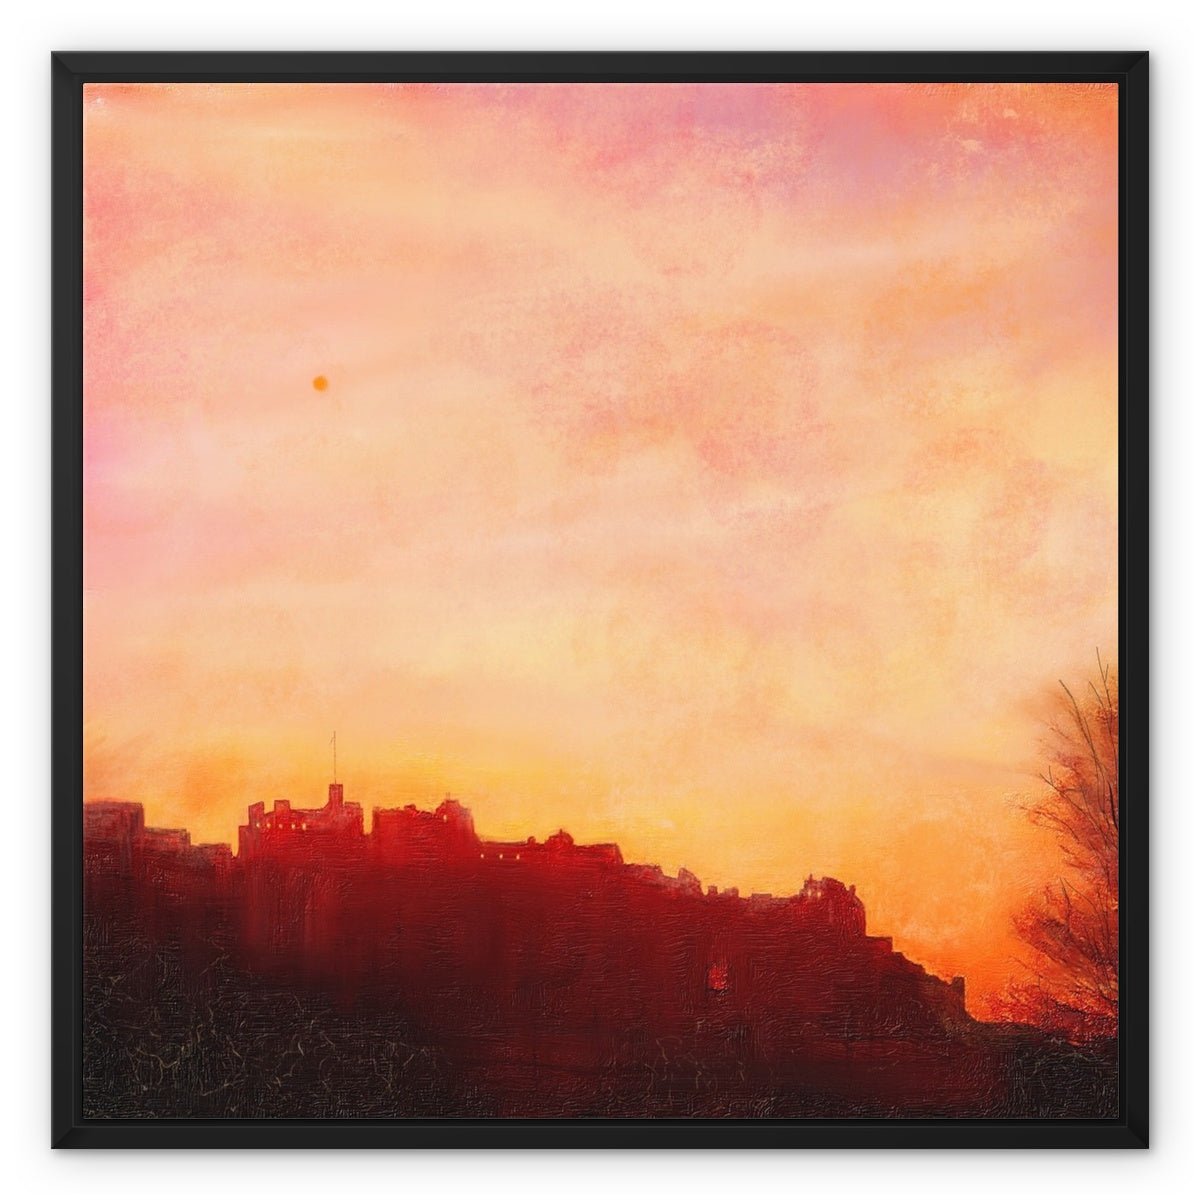 Edinburgh Castle Sunset Painting | Framed Canvas From Scotland-Floating Framed Canvas Prints-Historic & Iconic Scotland Art Gallery-24"x24"-Black Frame-Paintings, Prints, Homeware, Art Gifts From Scotland By Scottish Artist Kevin Hunter